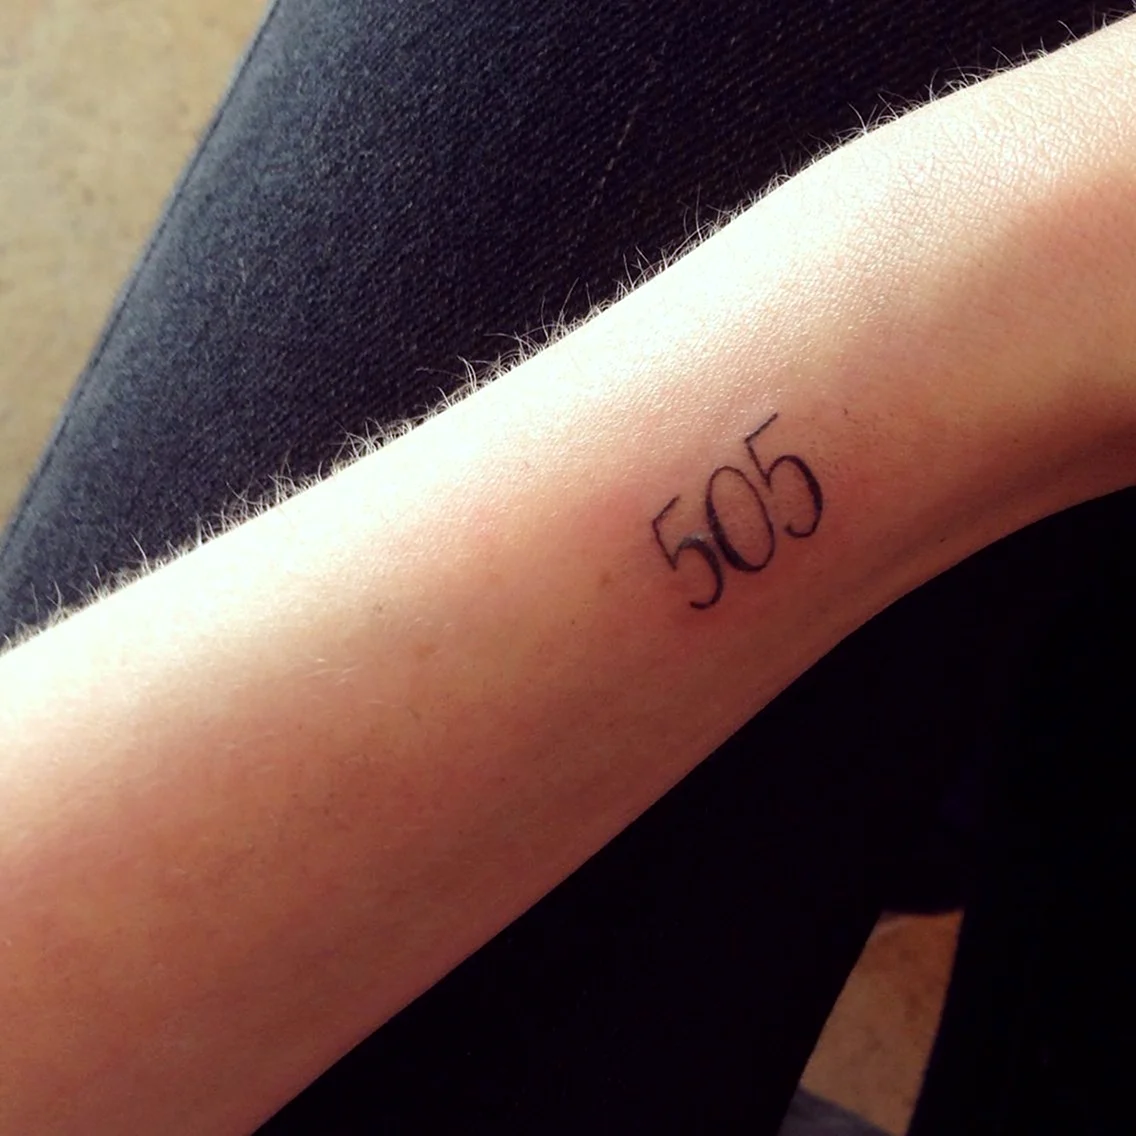 Arctic Monkeys Tattoo